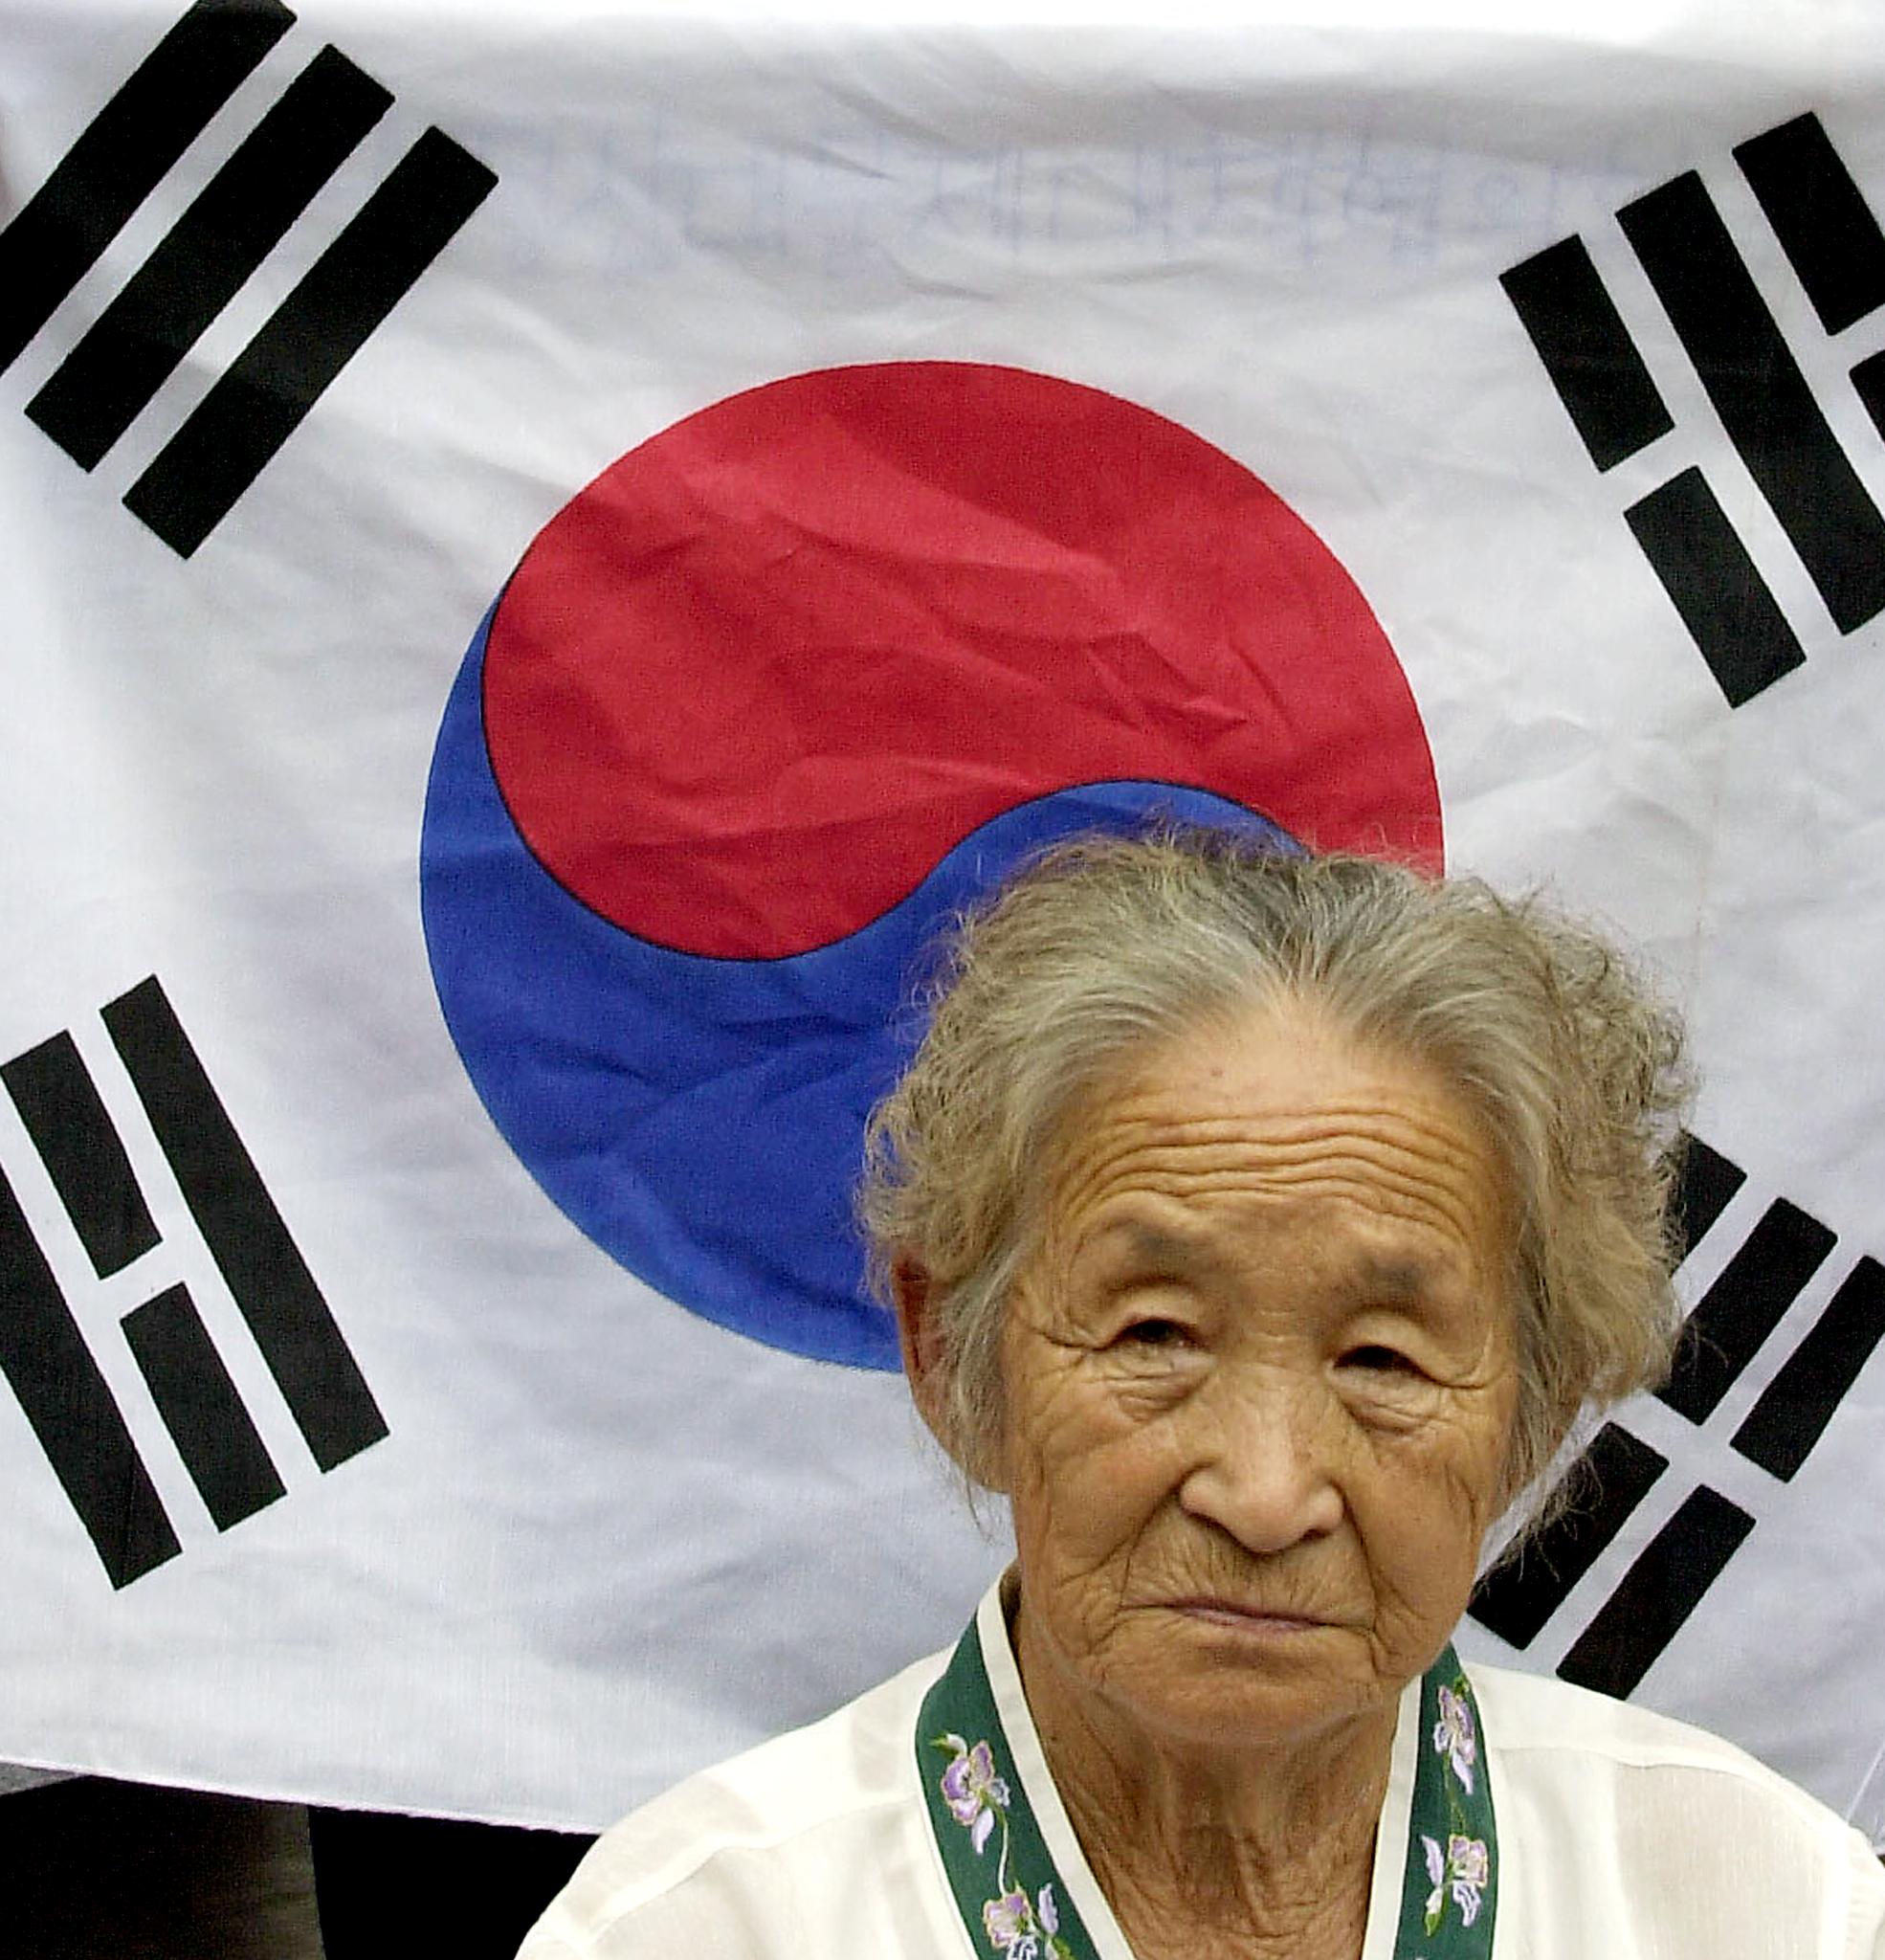 elderly south korea